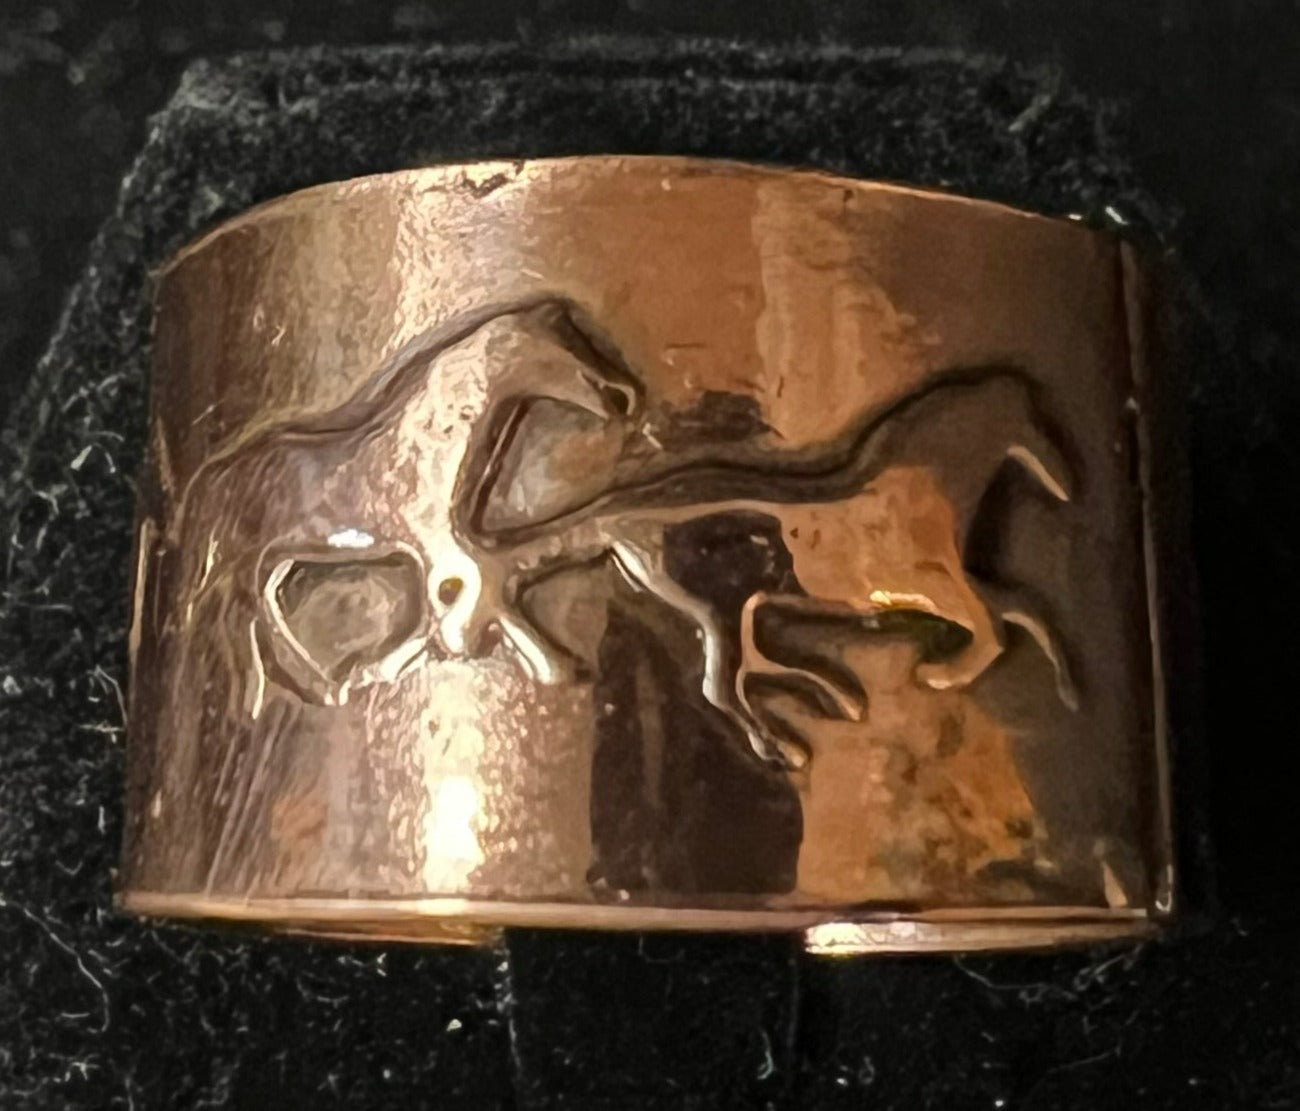 Running Horse Copper Ring